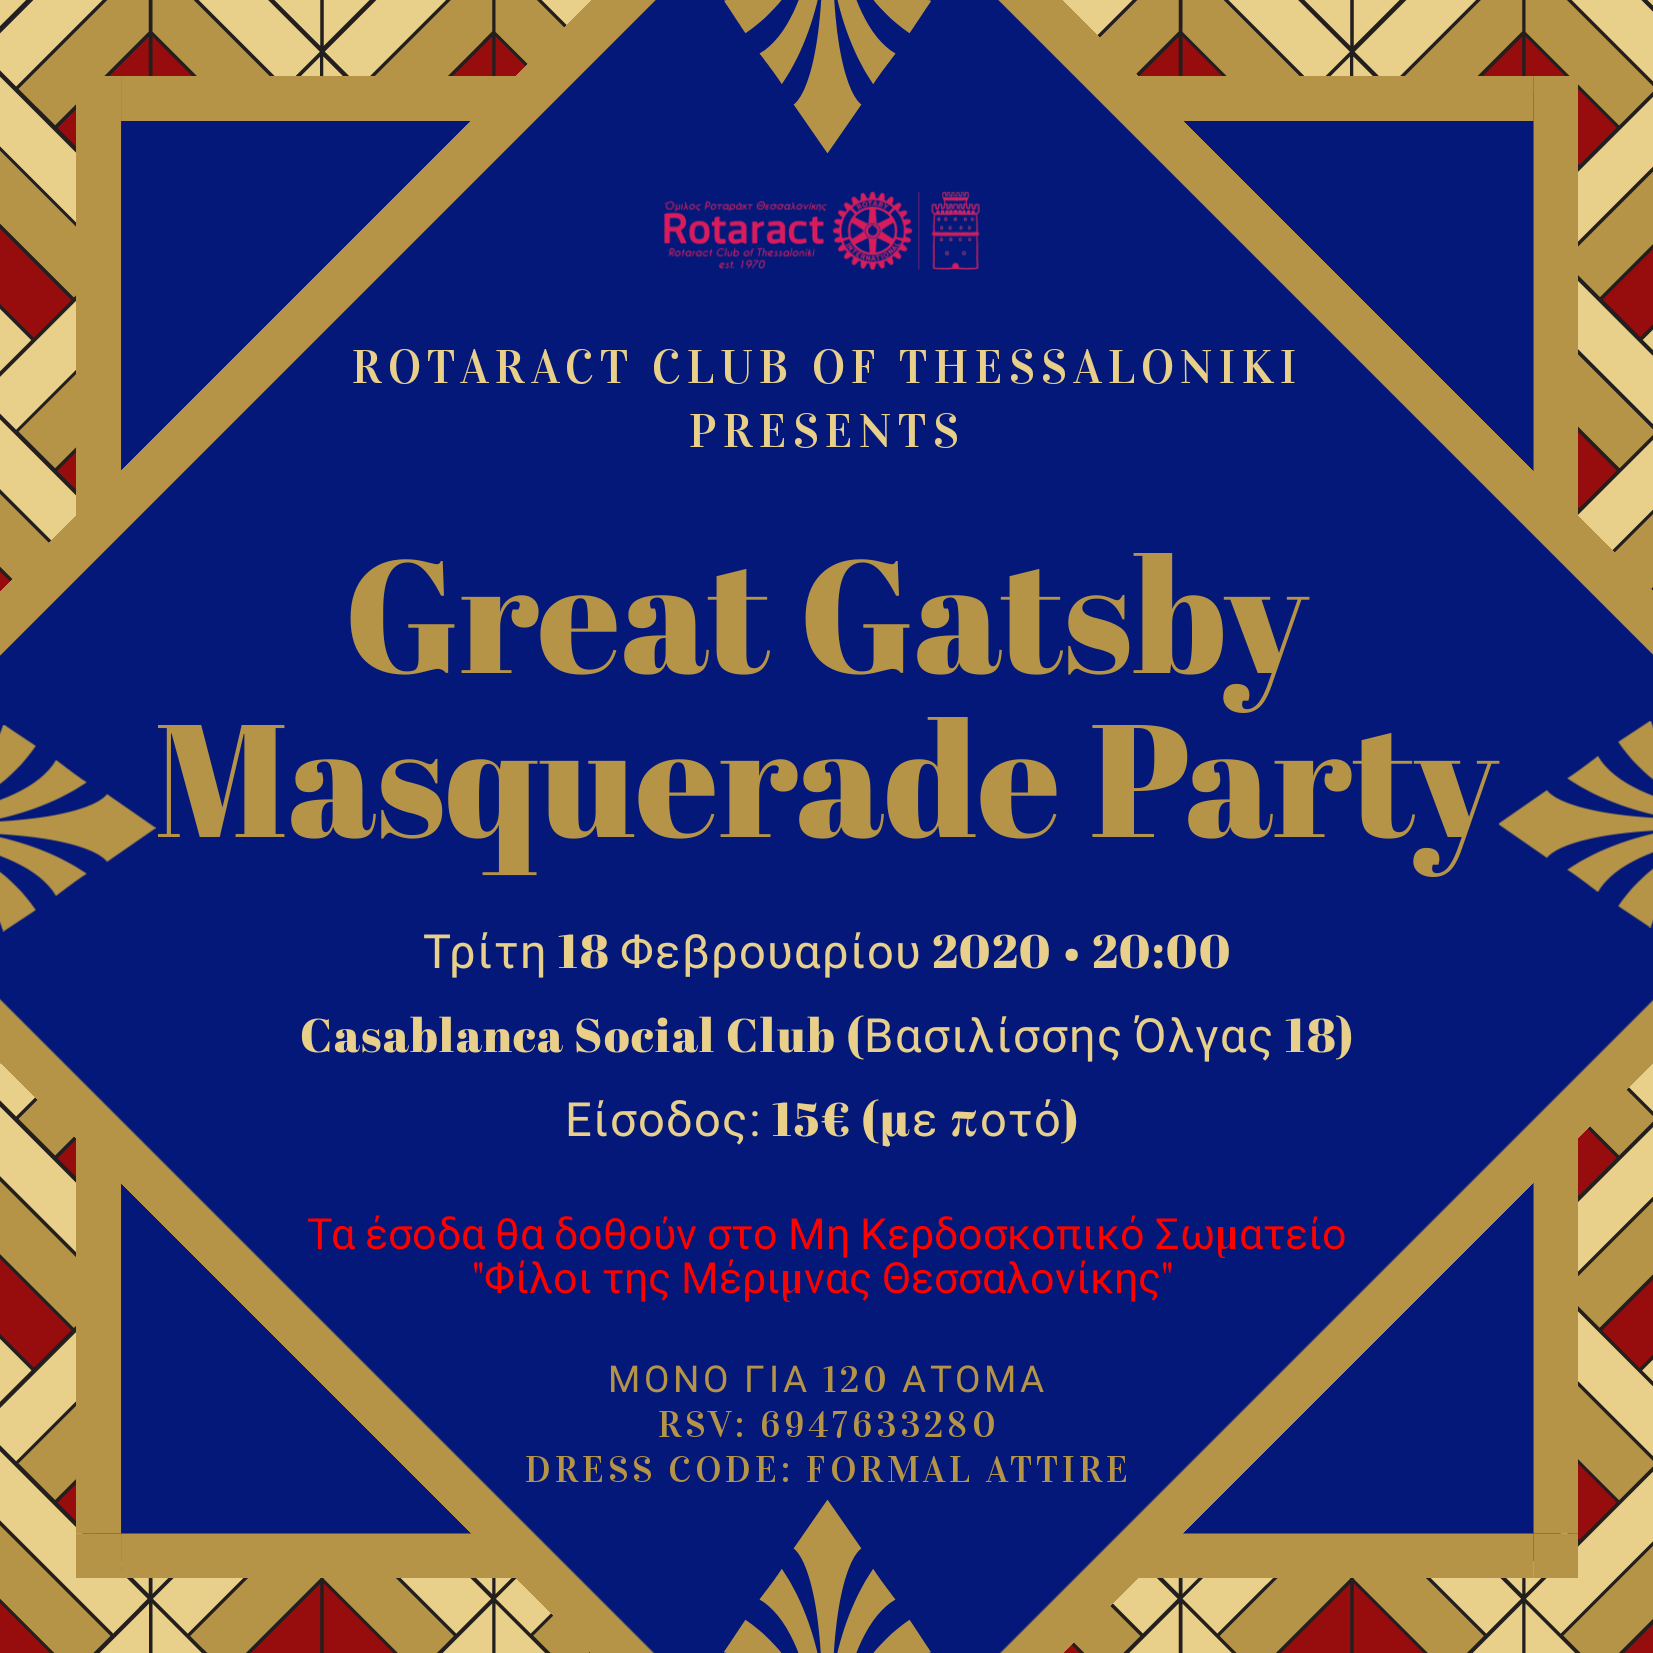 Great Gatsby Masquerade Party στη Θεσσαλονίκη